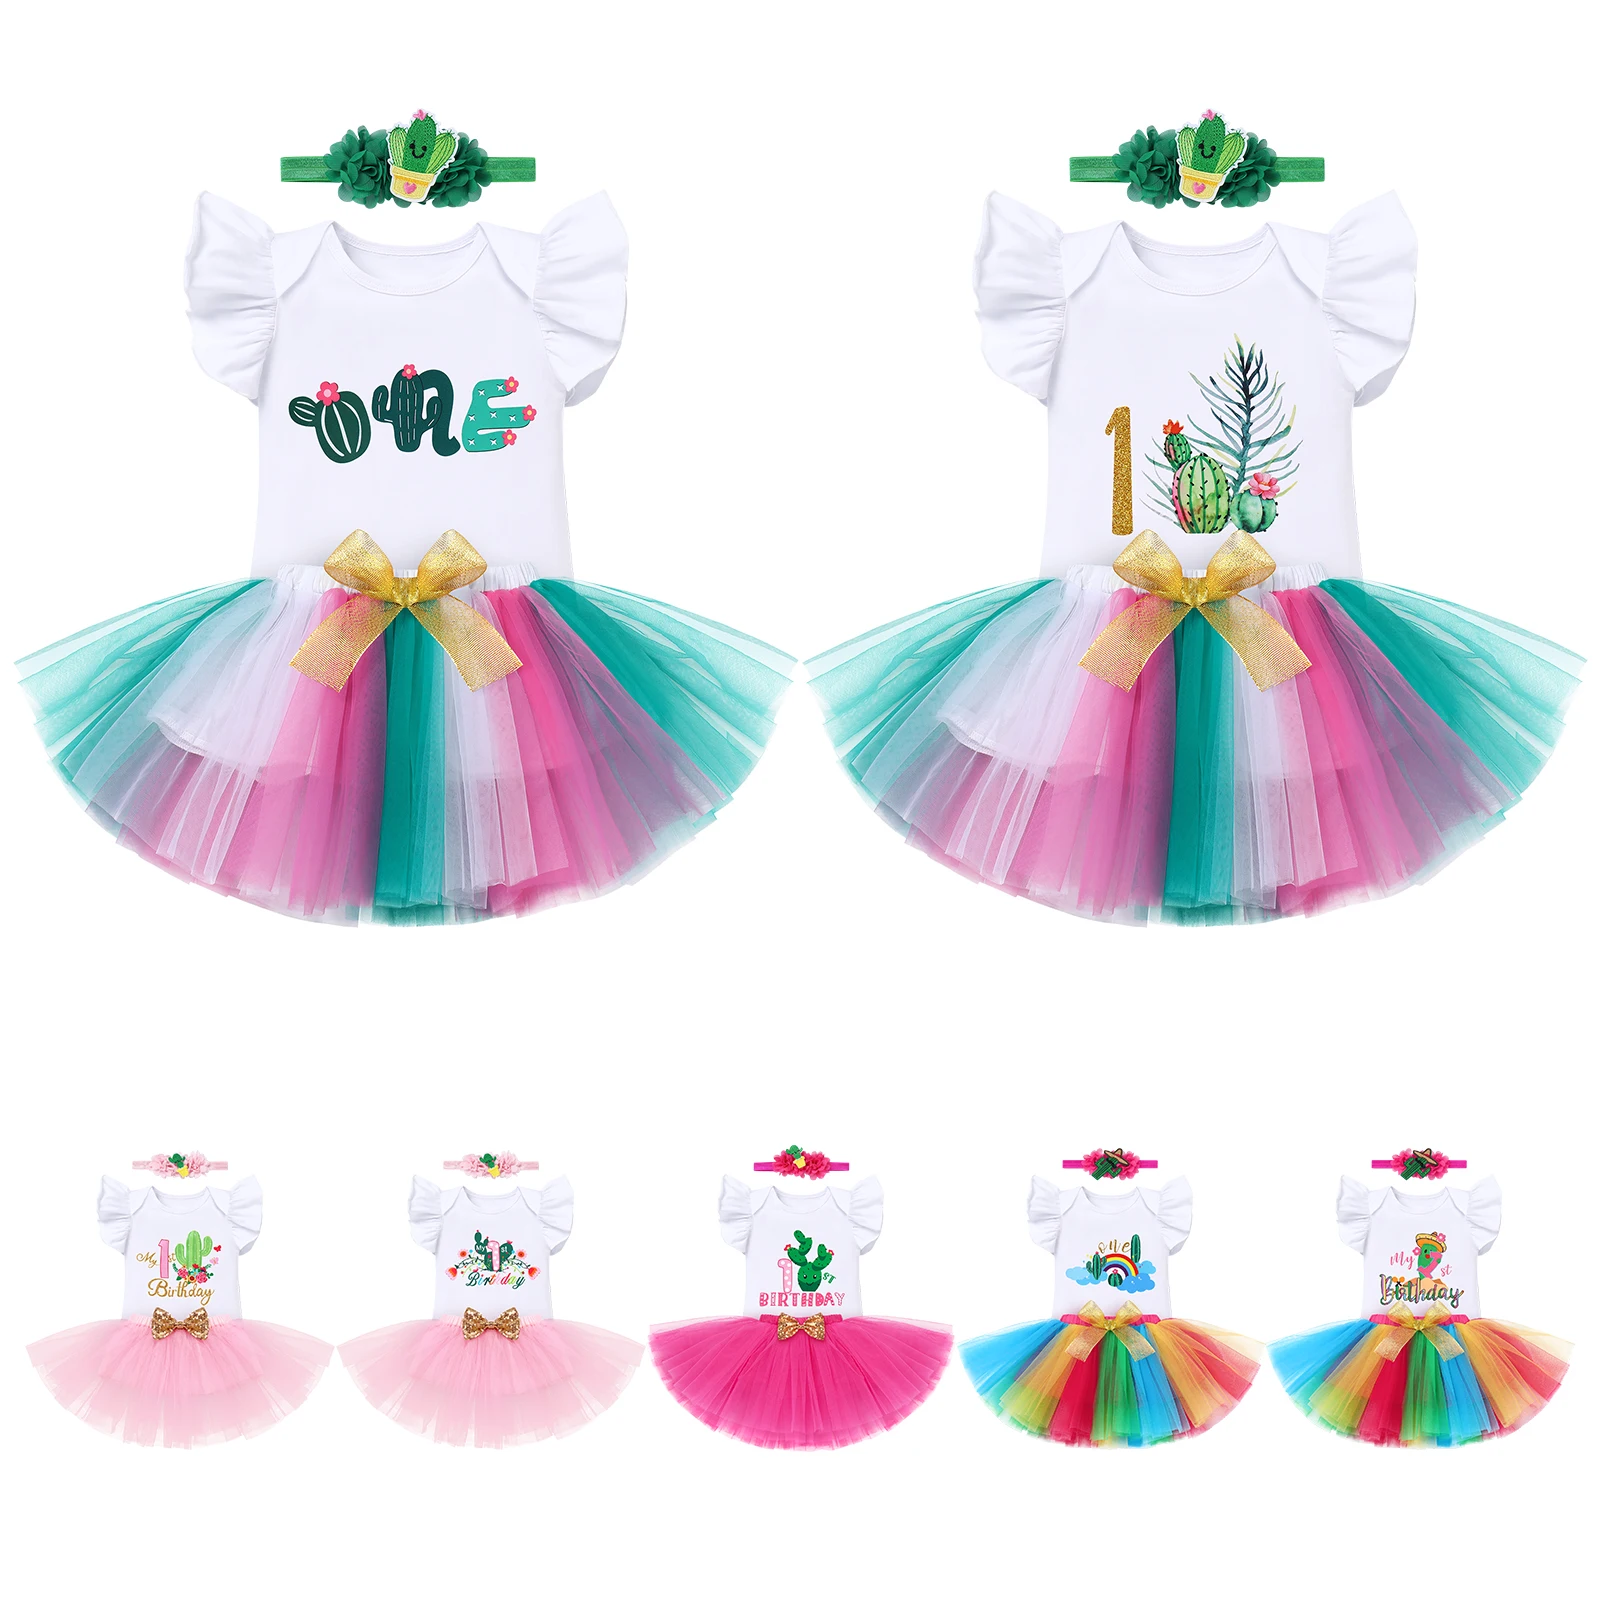 Newborn Baby Girls Cactus Themed Birthday Party Outfit  Baby Girls Cake Smash Ruffled Romper With Skirt And Headband